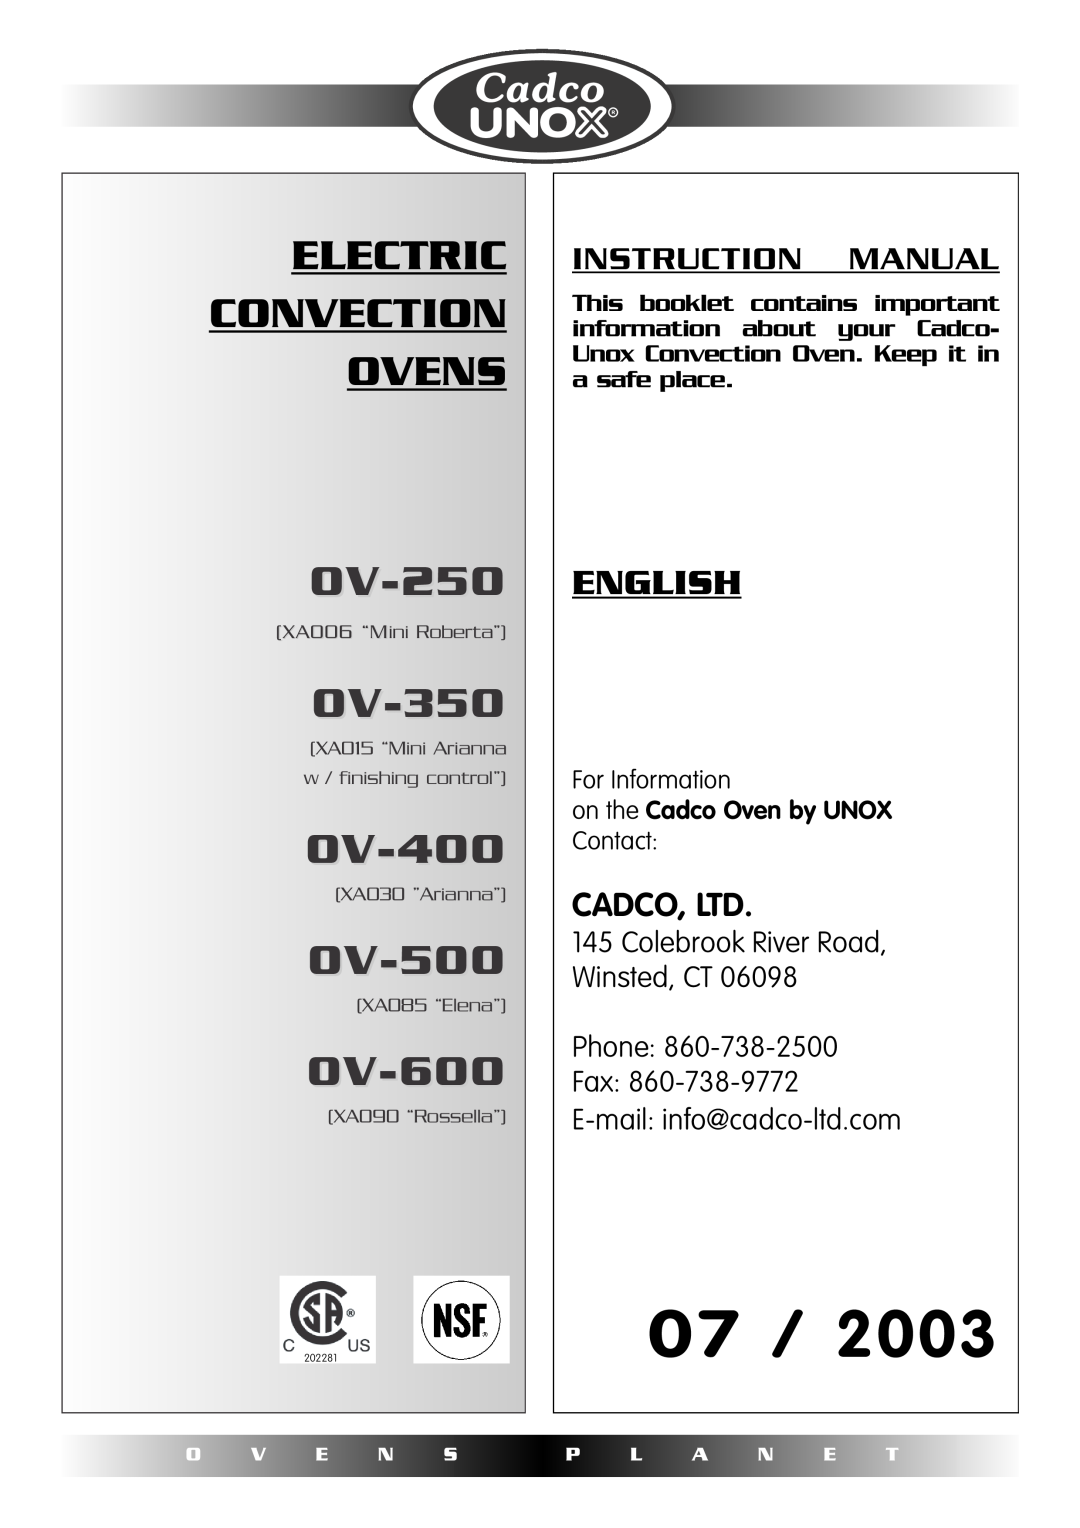 Cadco OV-250 instruction manual English, Electric Convection Ovens, OV-350, OV-400, OV-500, OV-600, For Information 